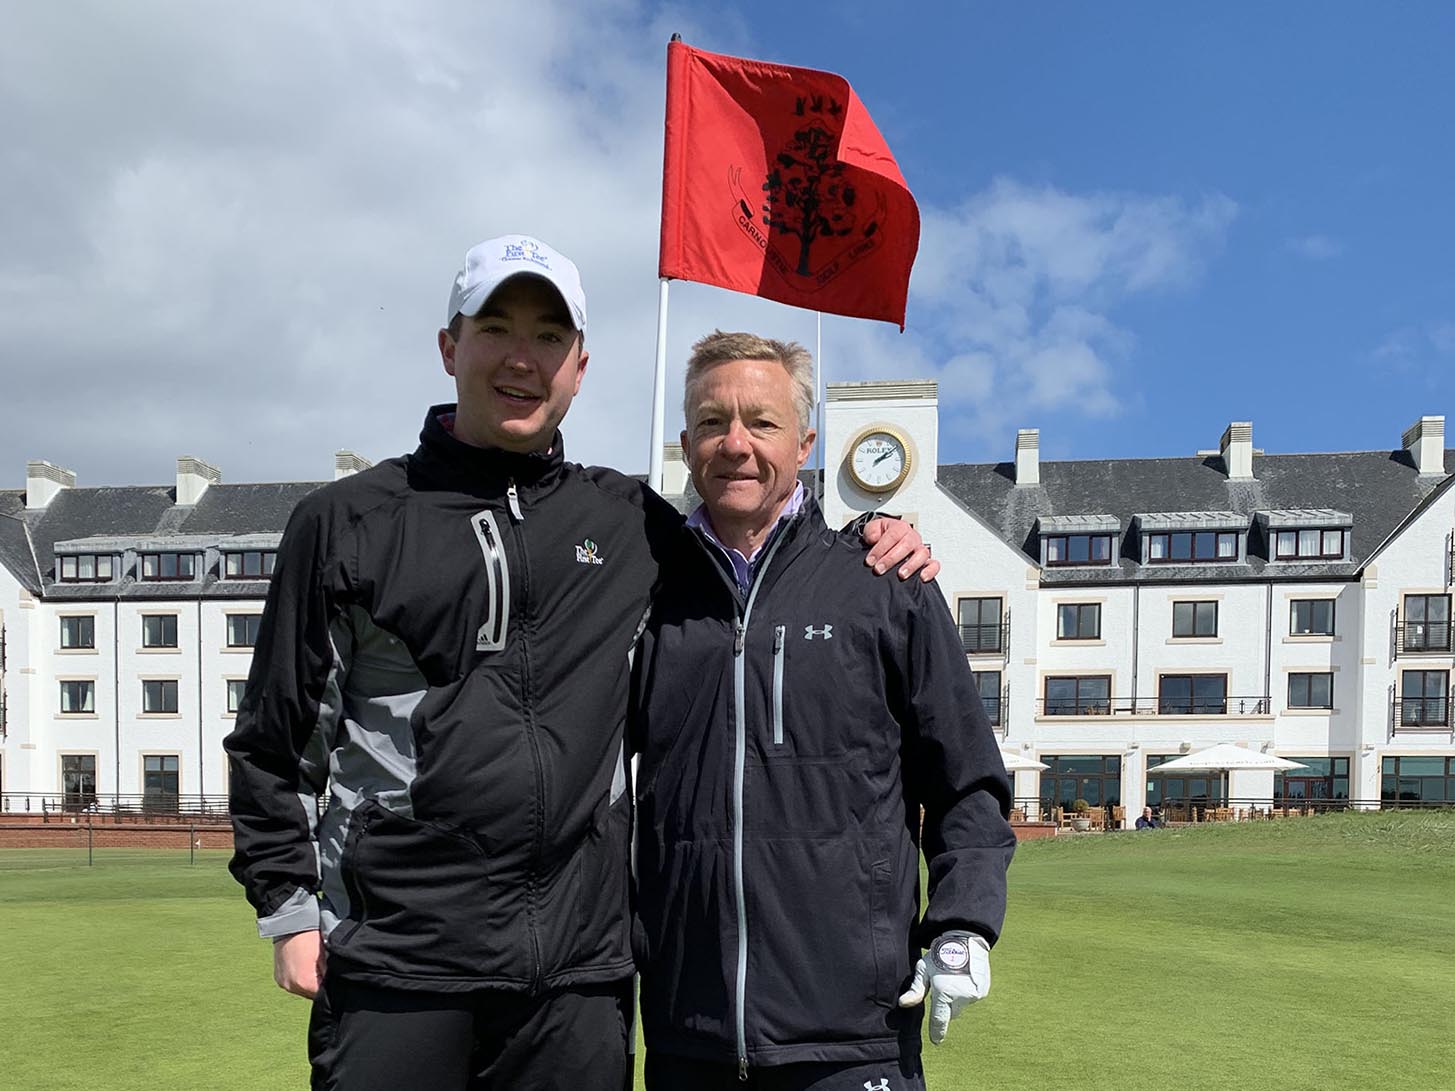 Haversham & Baker Scotland golf trip reviews